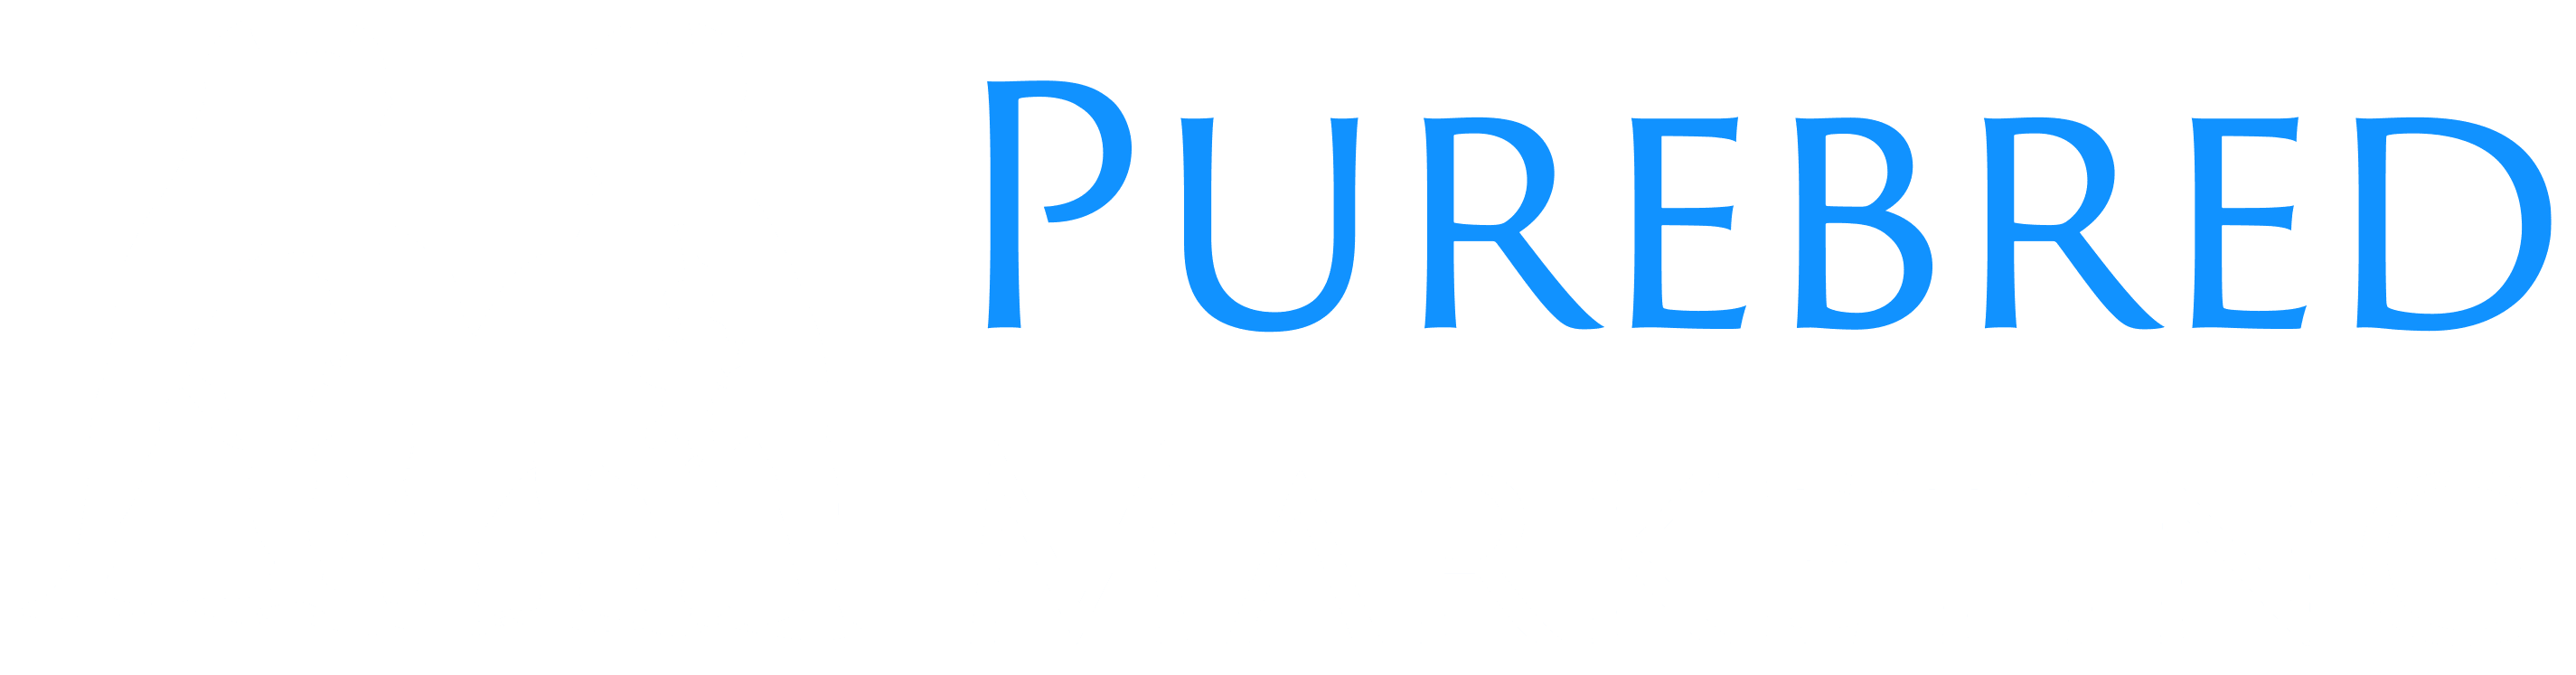 Purebred Marketing logo